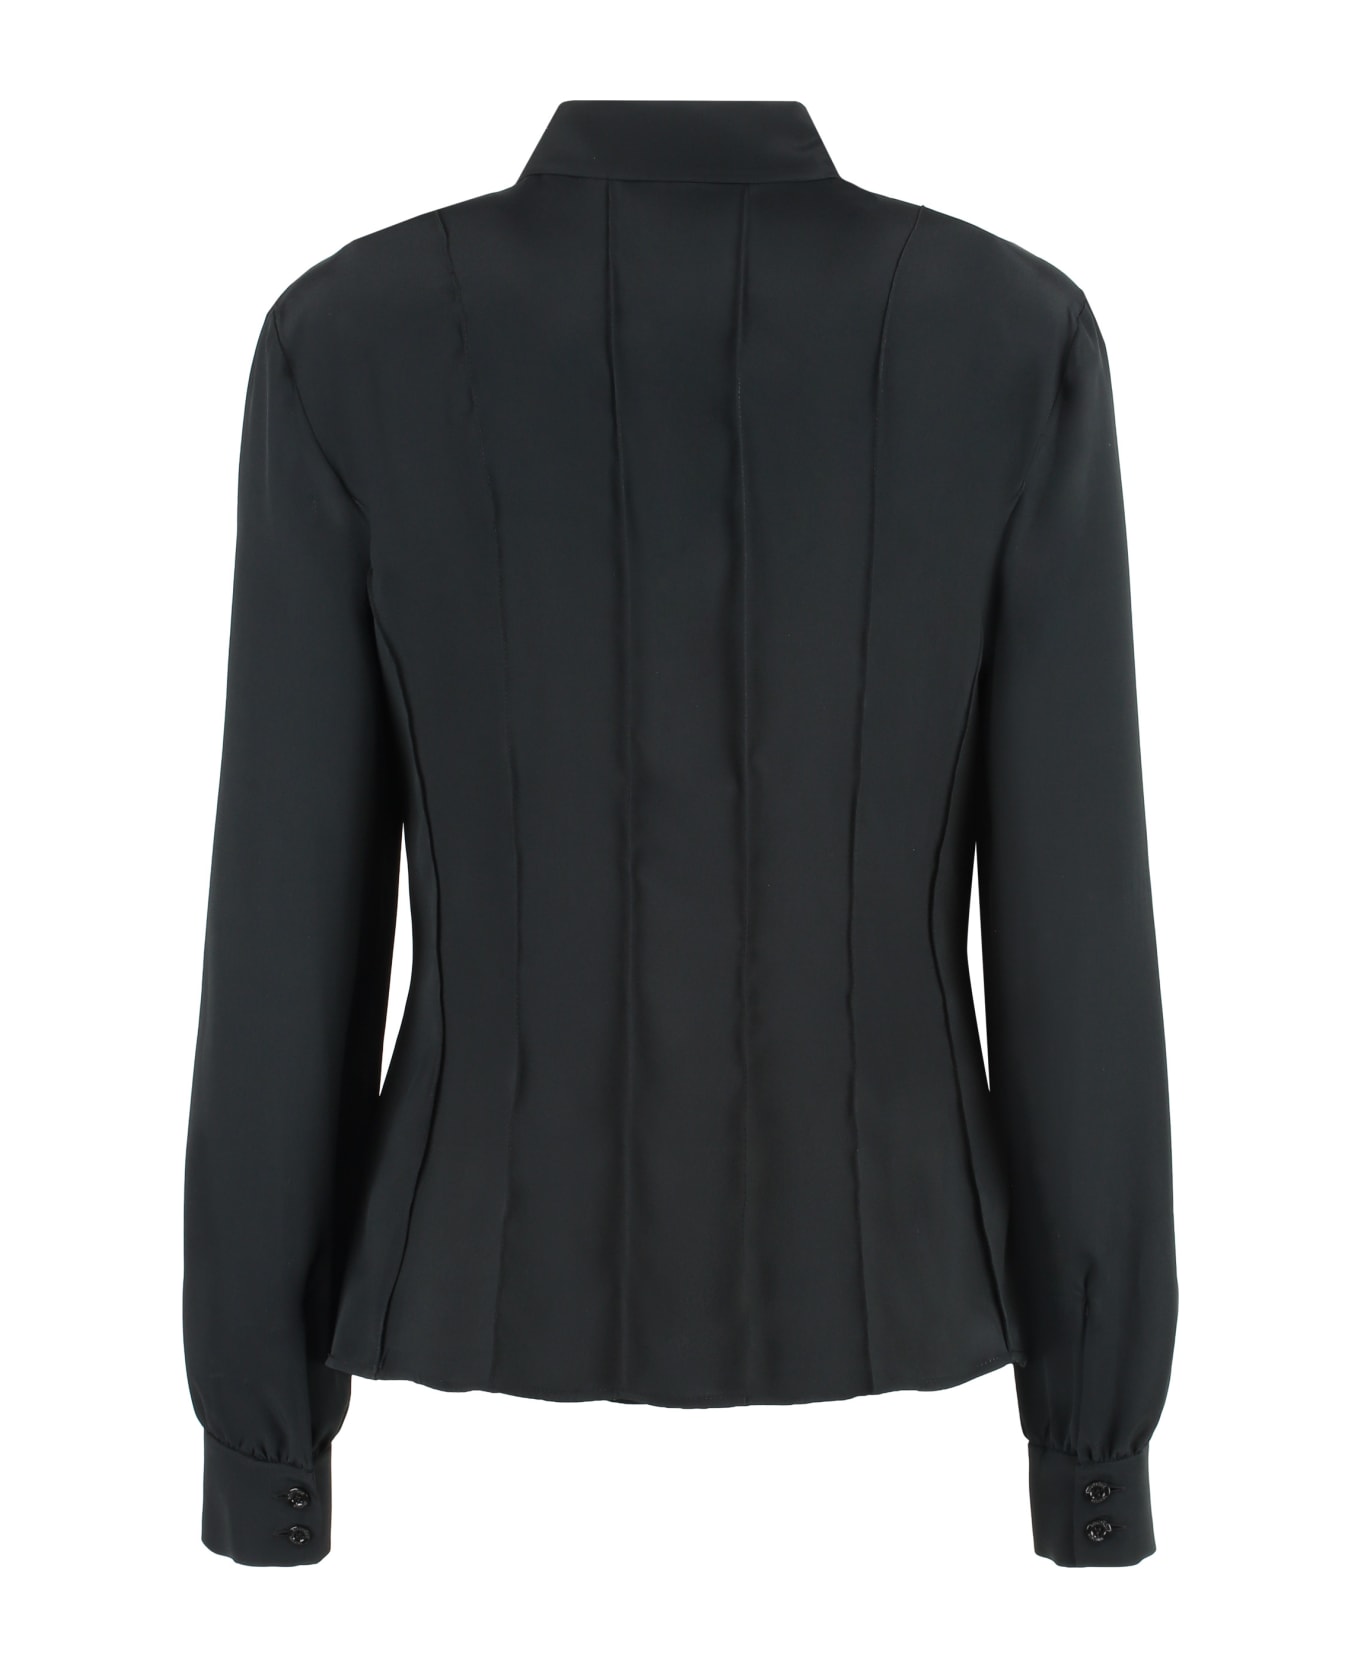 Boutique Moschino Silk Shirt - black